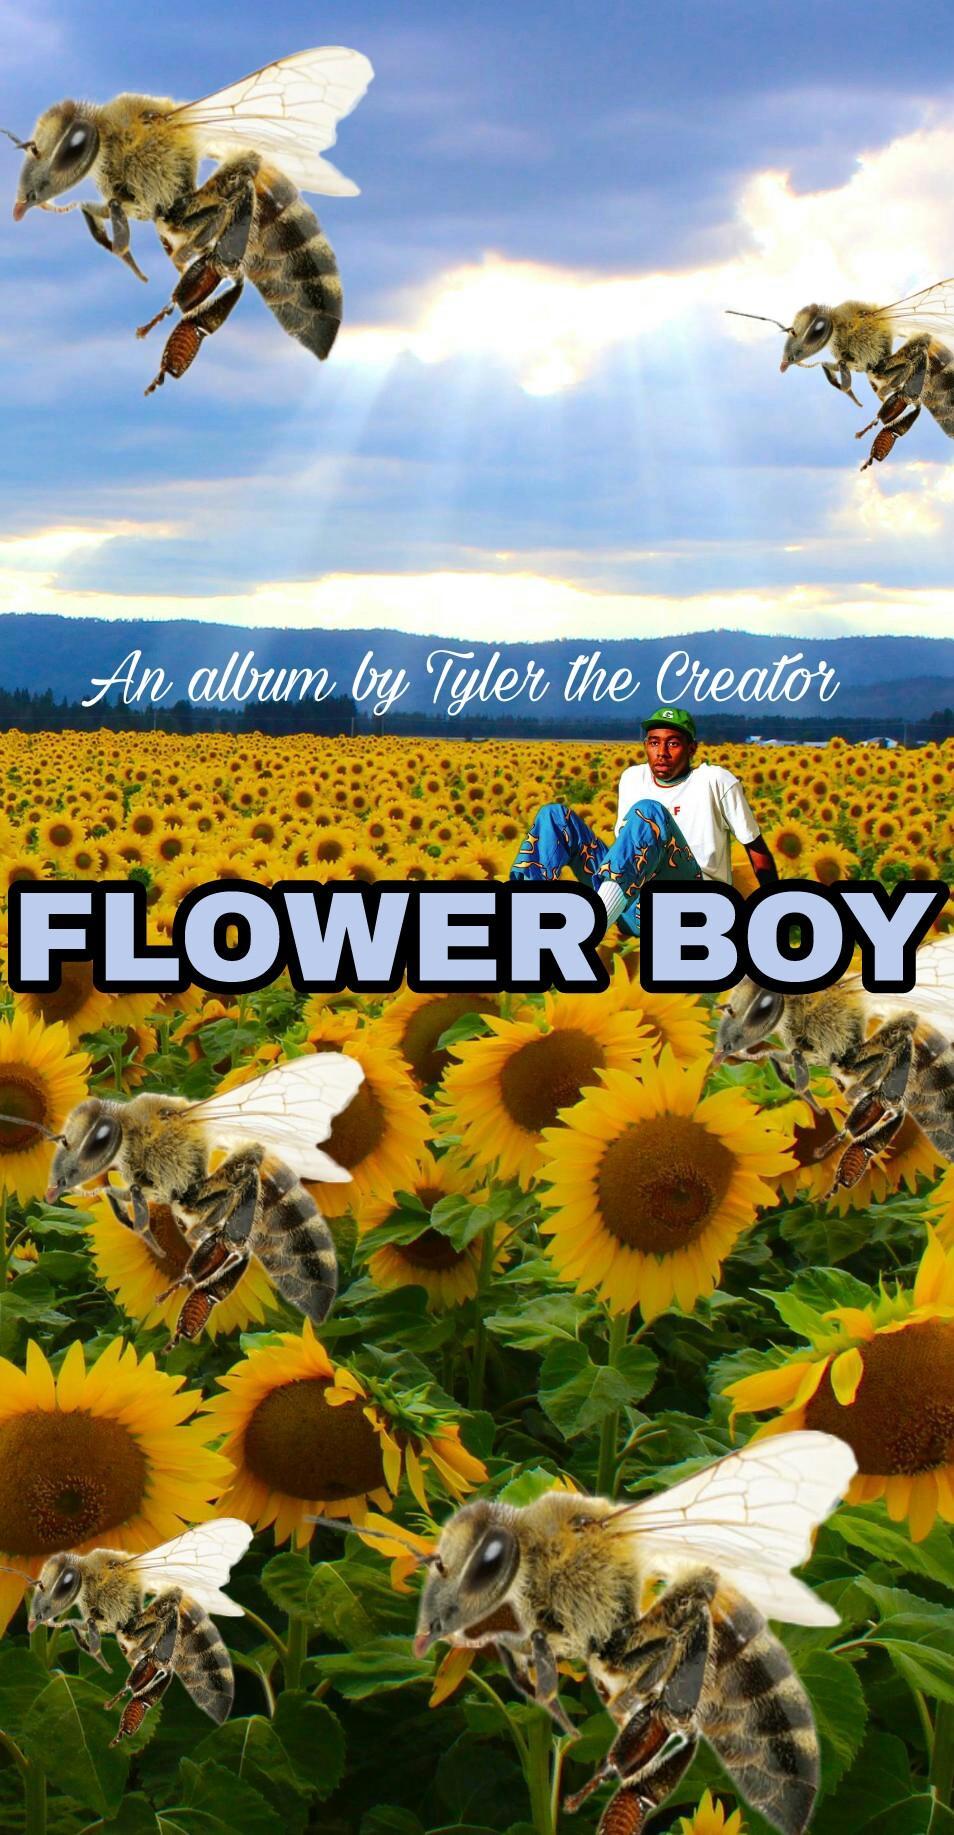 tyler the creator flower boy album download